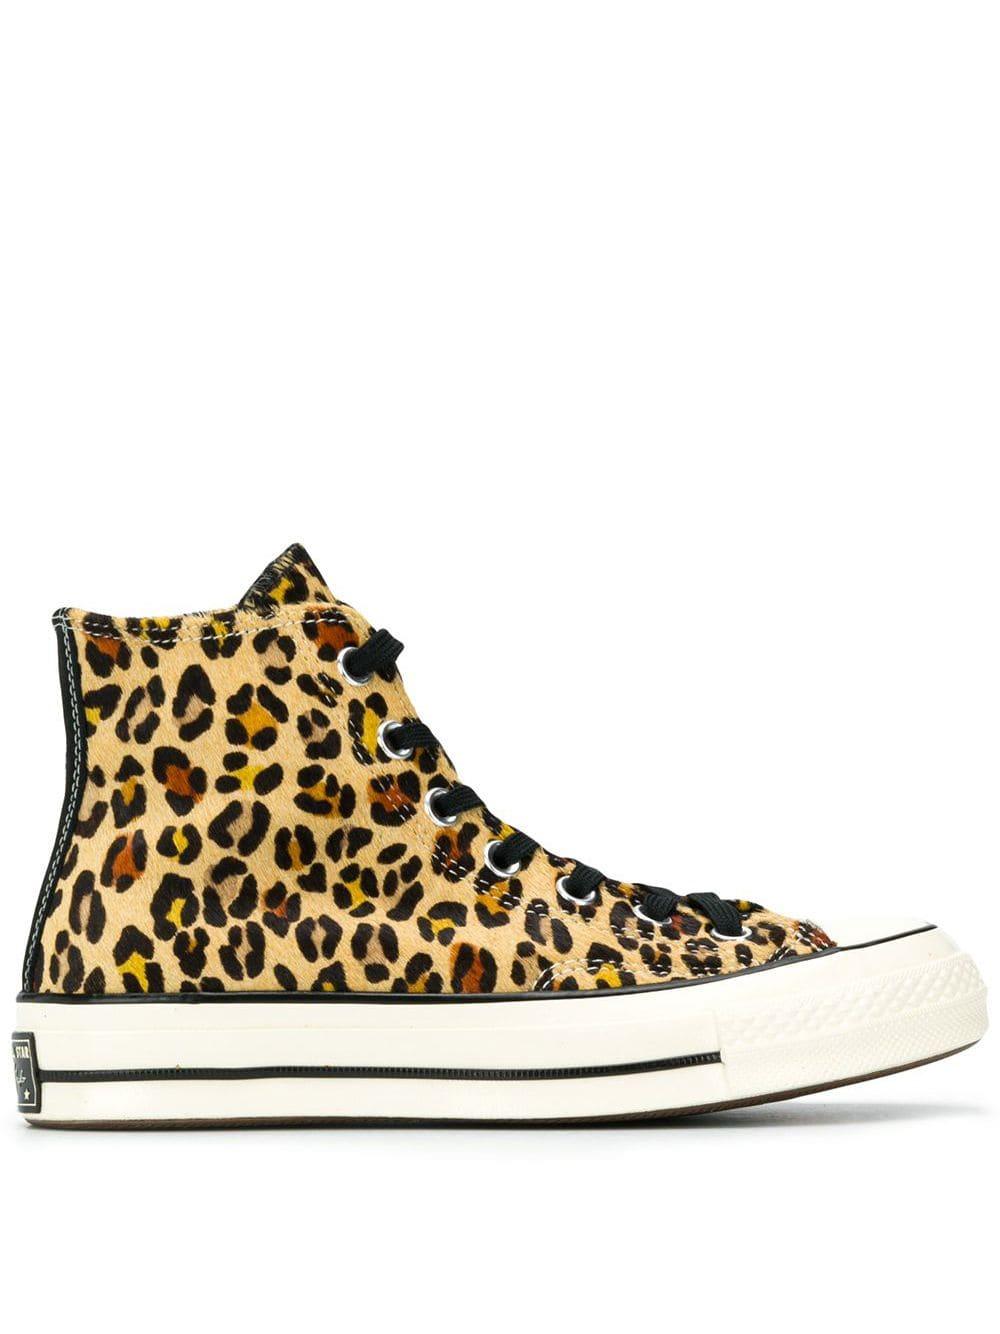 Converse Leopard Print Hi-top Sneakers in Yellow | Lyst Australia